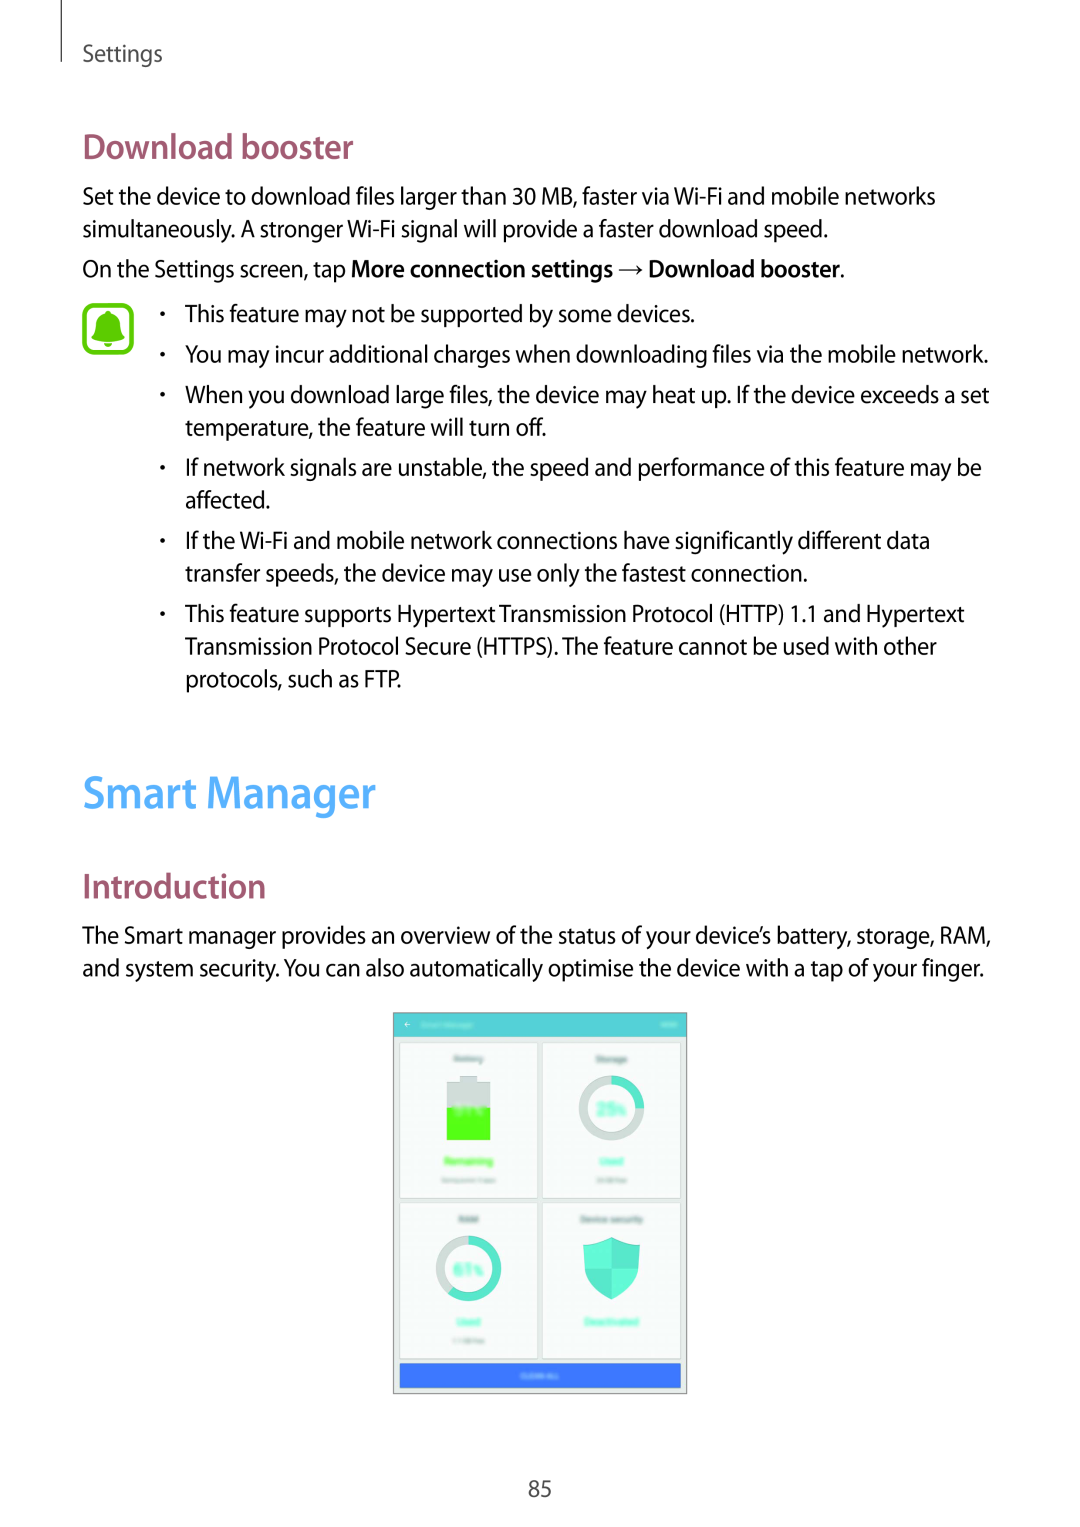 Samsung SM-T719NZWEEUR, SM-T819NZKEDBT, SM-T719NZKEDBT manual Smart Manager, Download booster, Introduction, Settings 